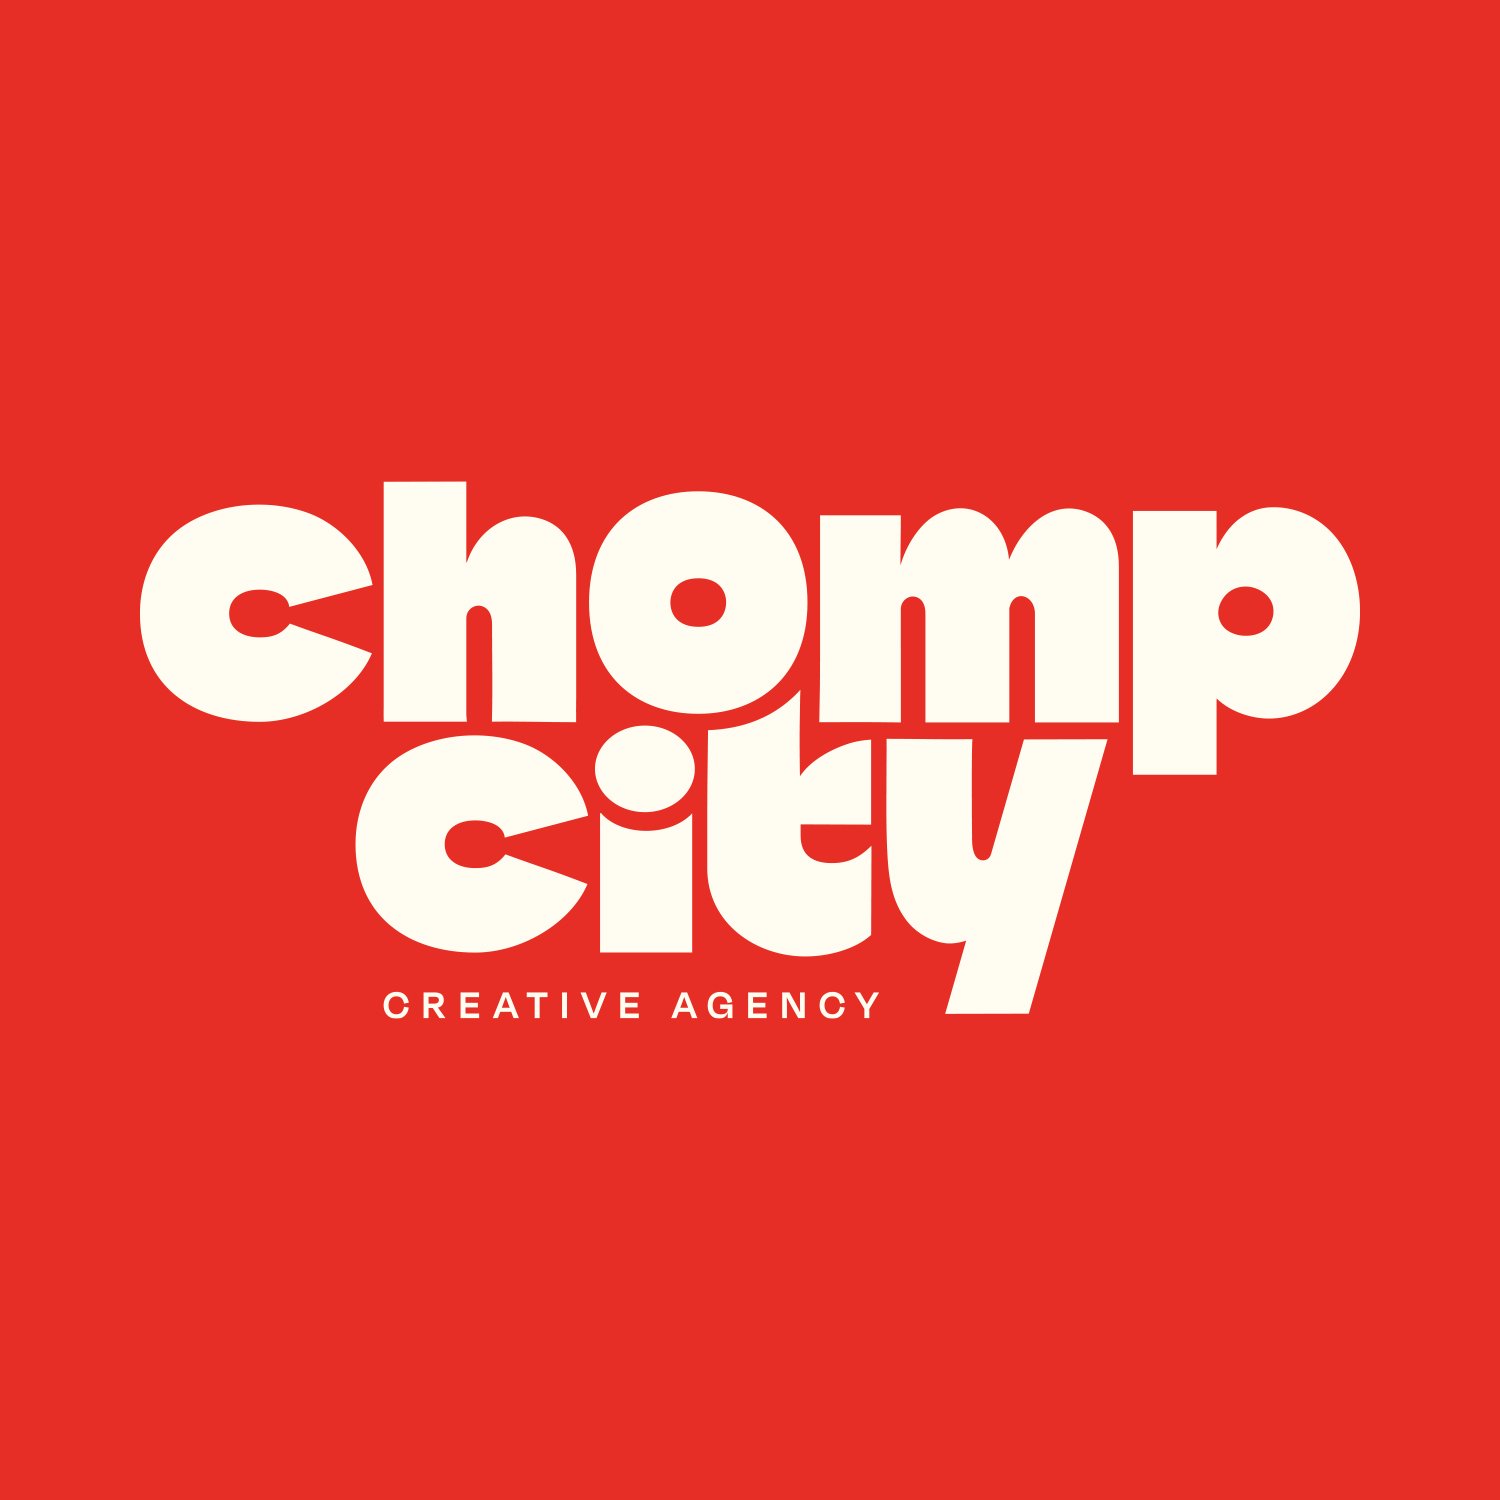 Chomp City Creative Agency